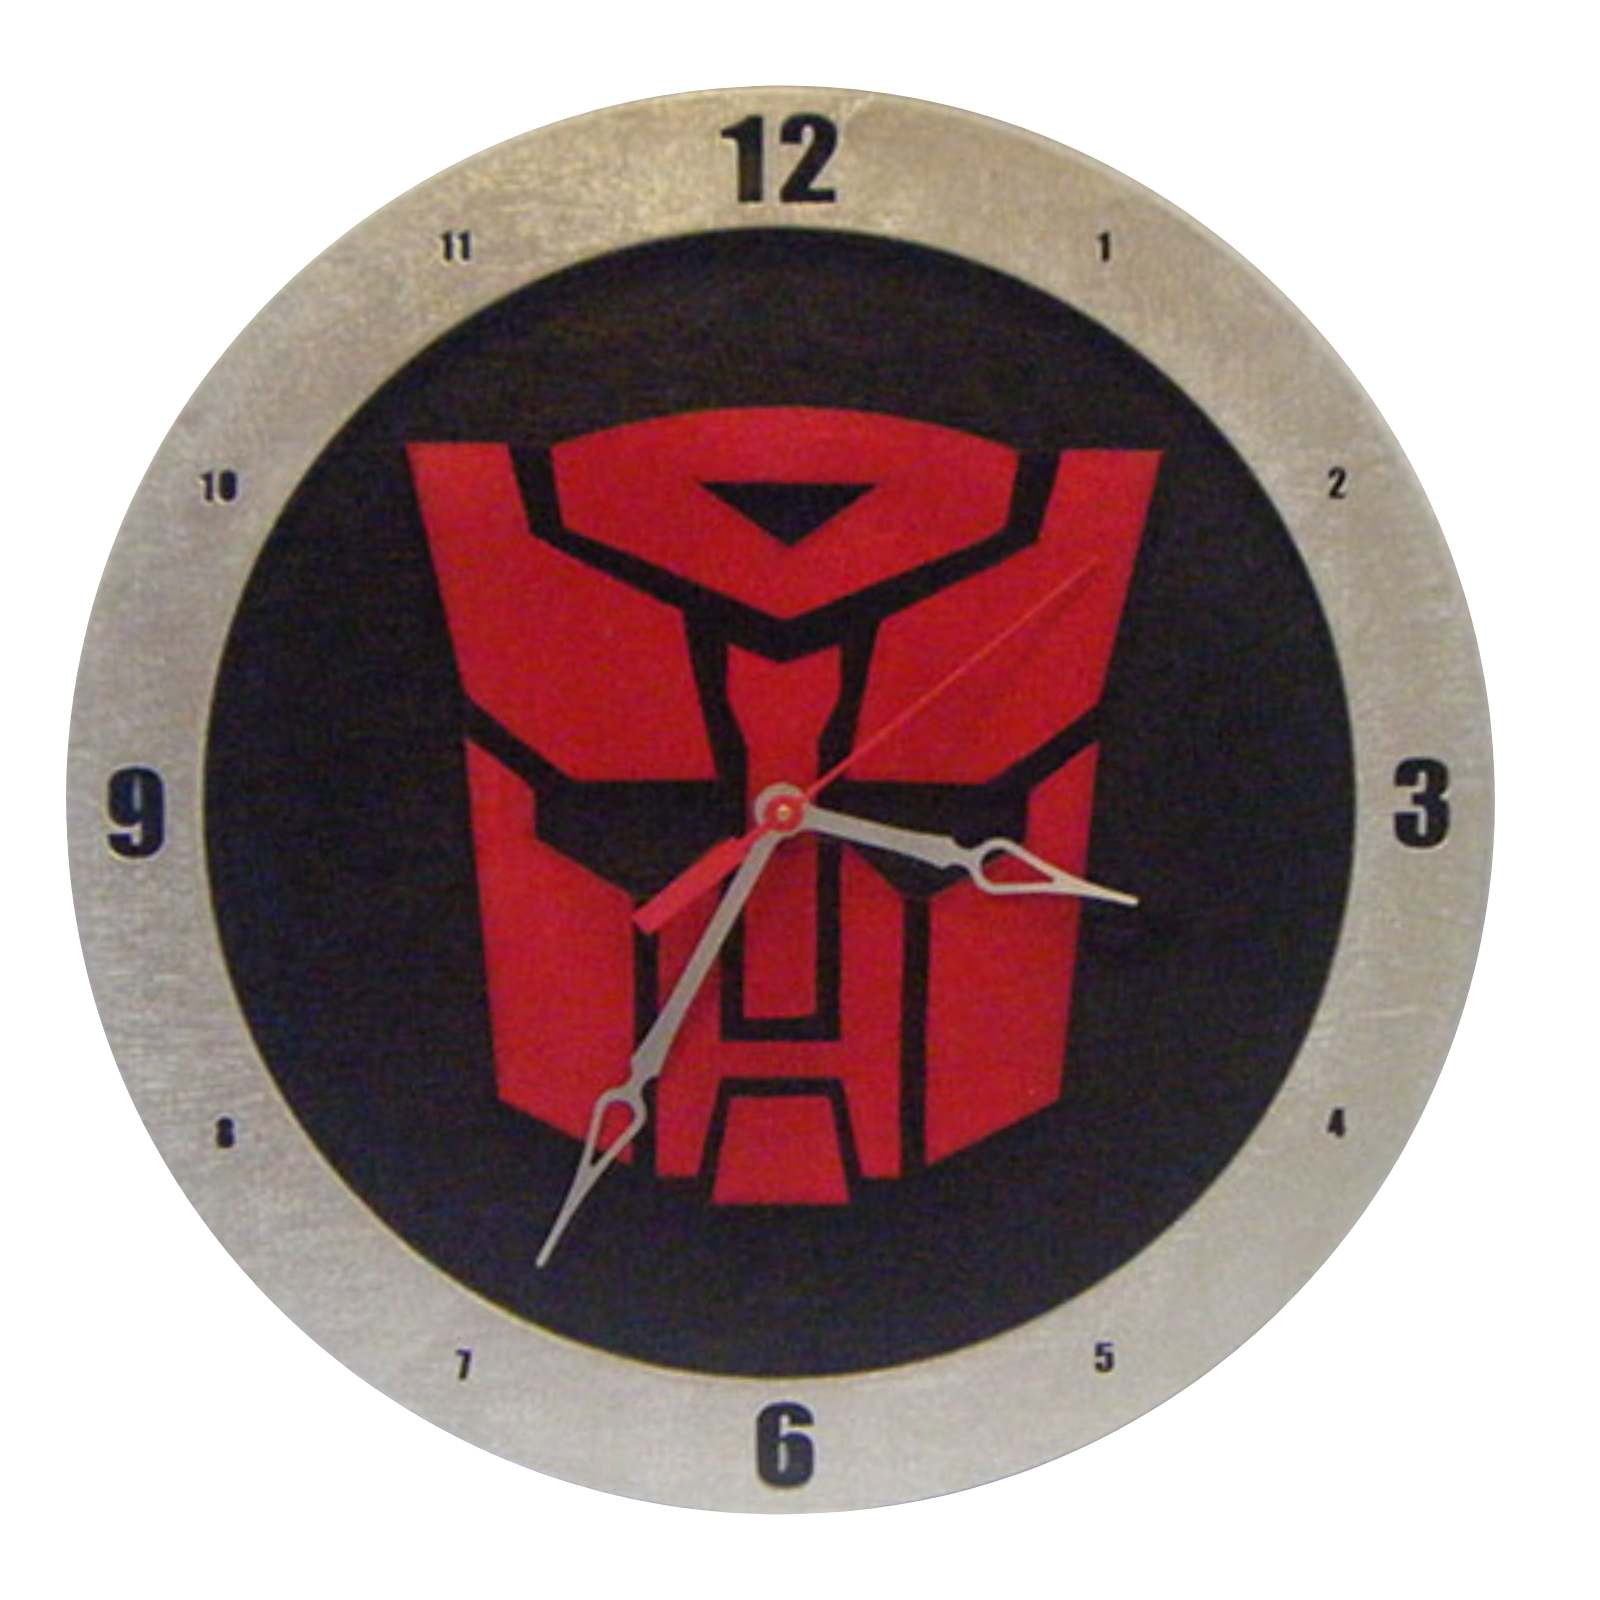 transformers clock mini figure